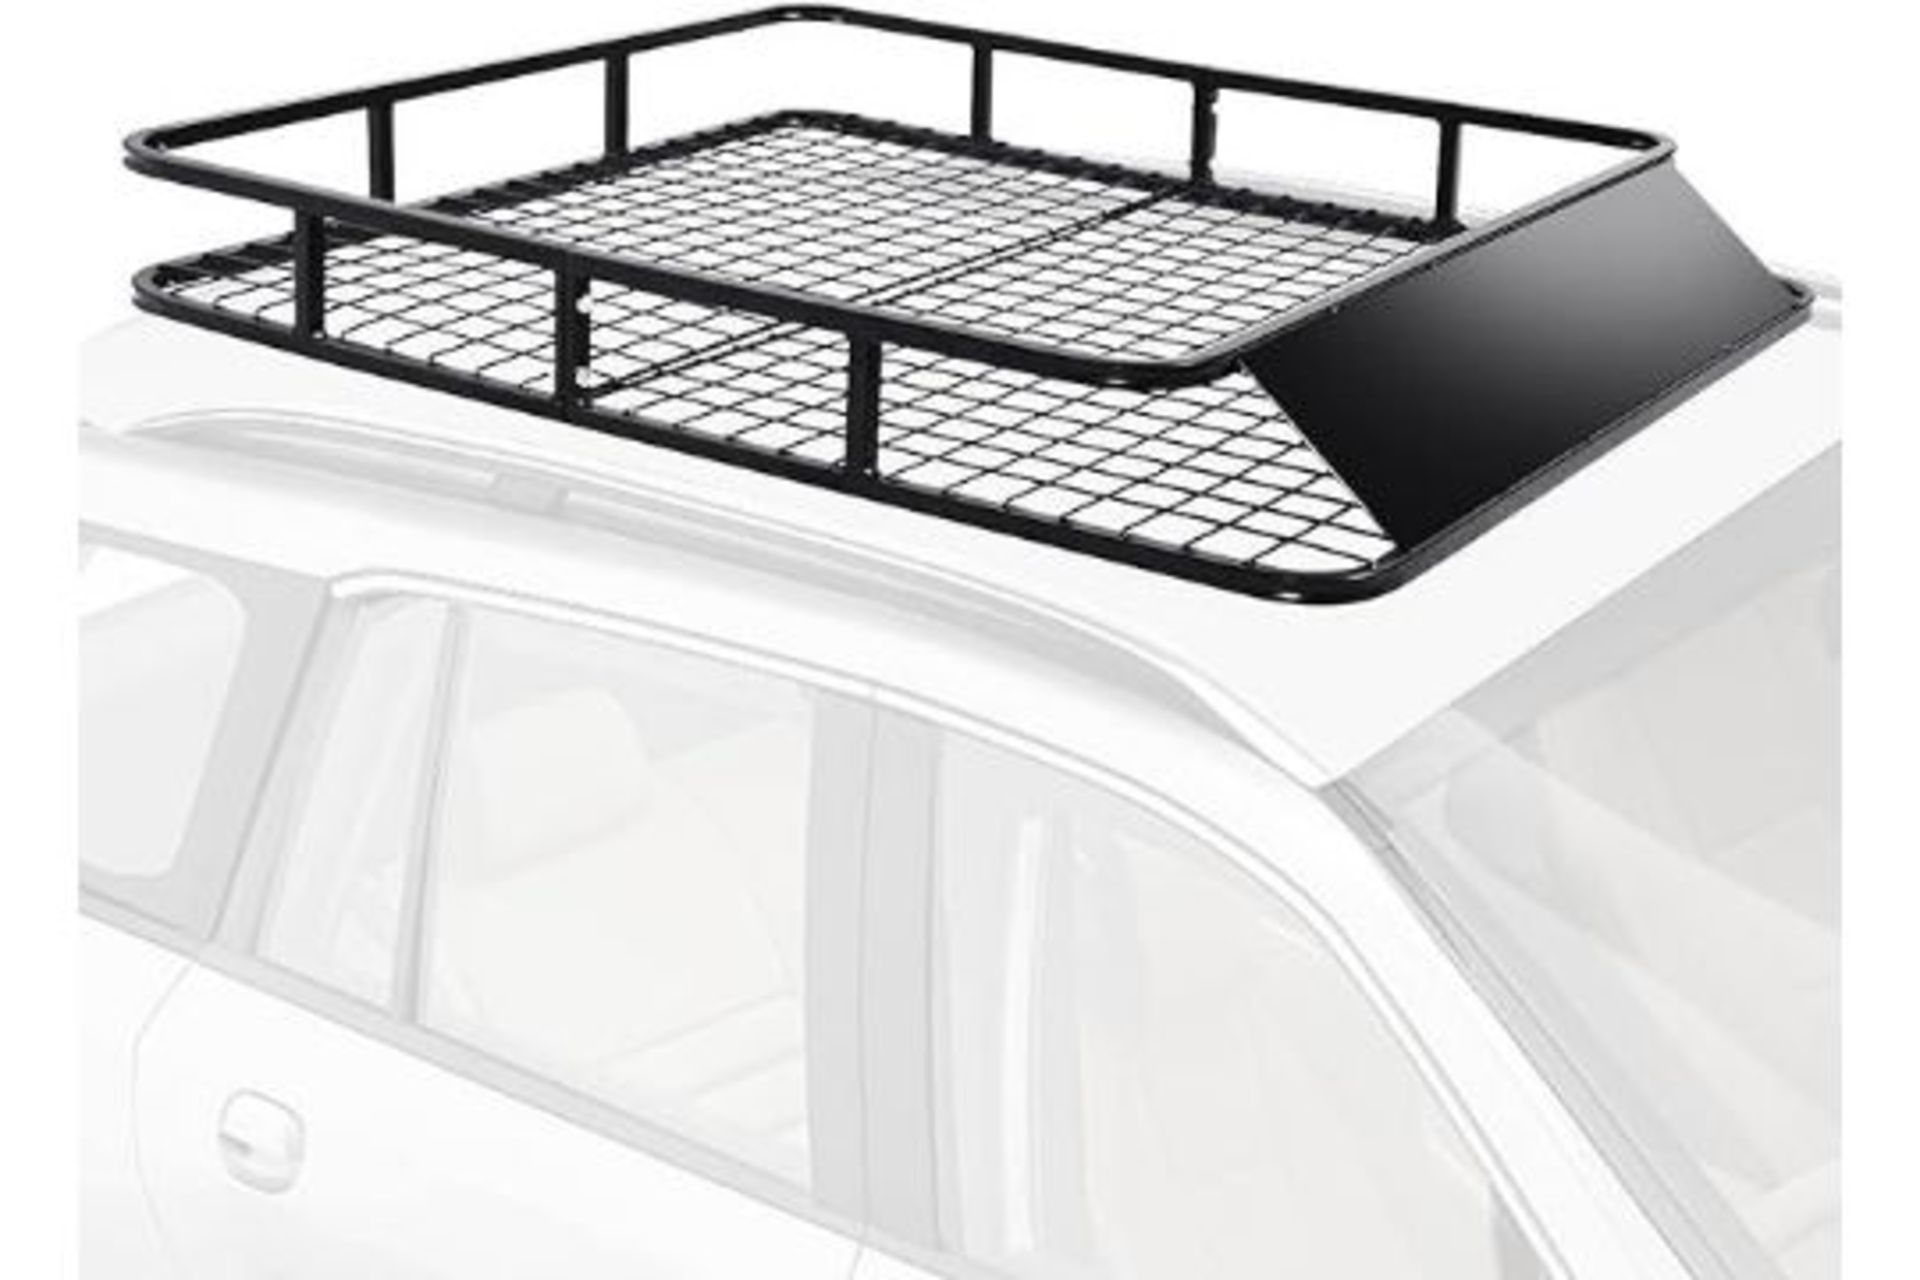 Roof Rack, Car Roof Rack Basket with Wind Shield, 4 U-Shaped Bolts, Heavy-Duty Steel Frame, 100KG